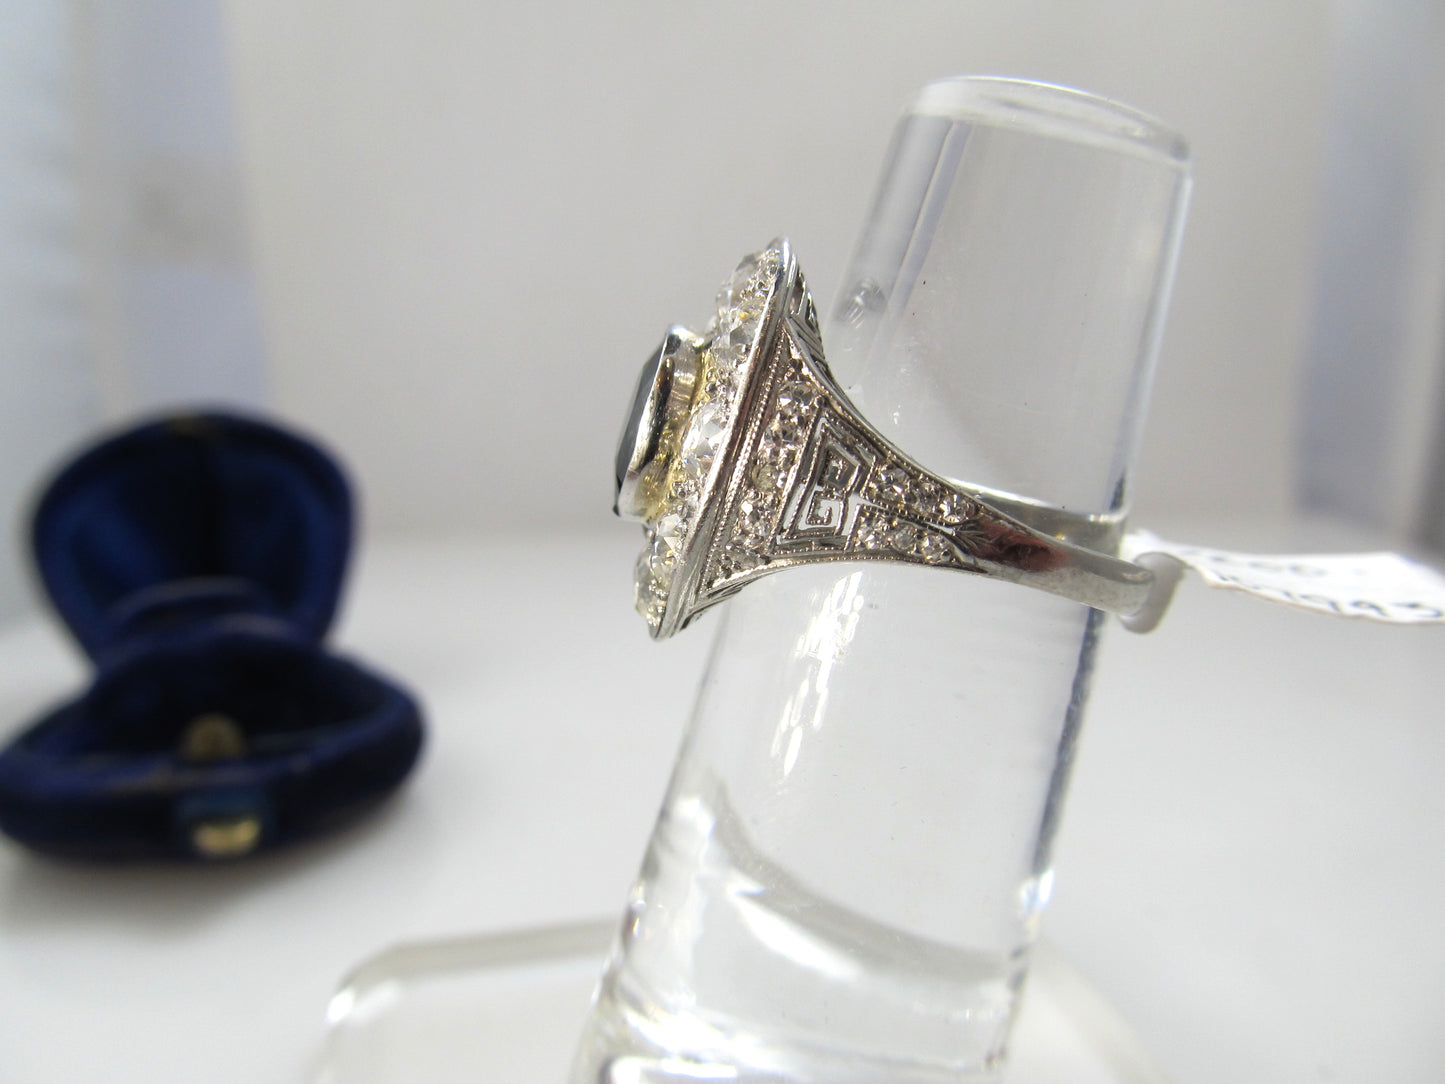 Antique platinum filigree statement ring with diamonds and a sapphire, circa 1920